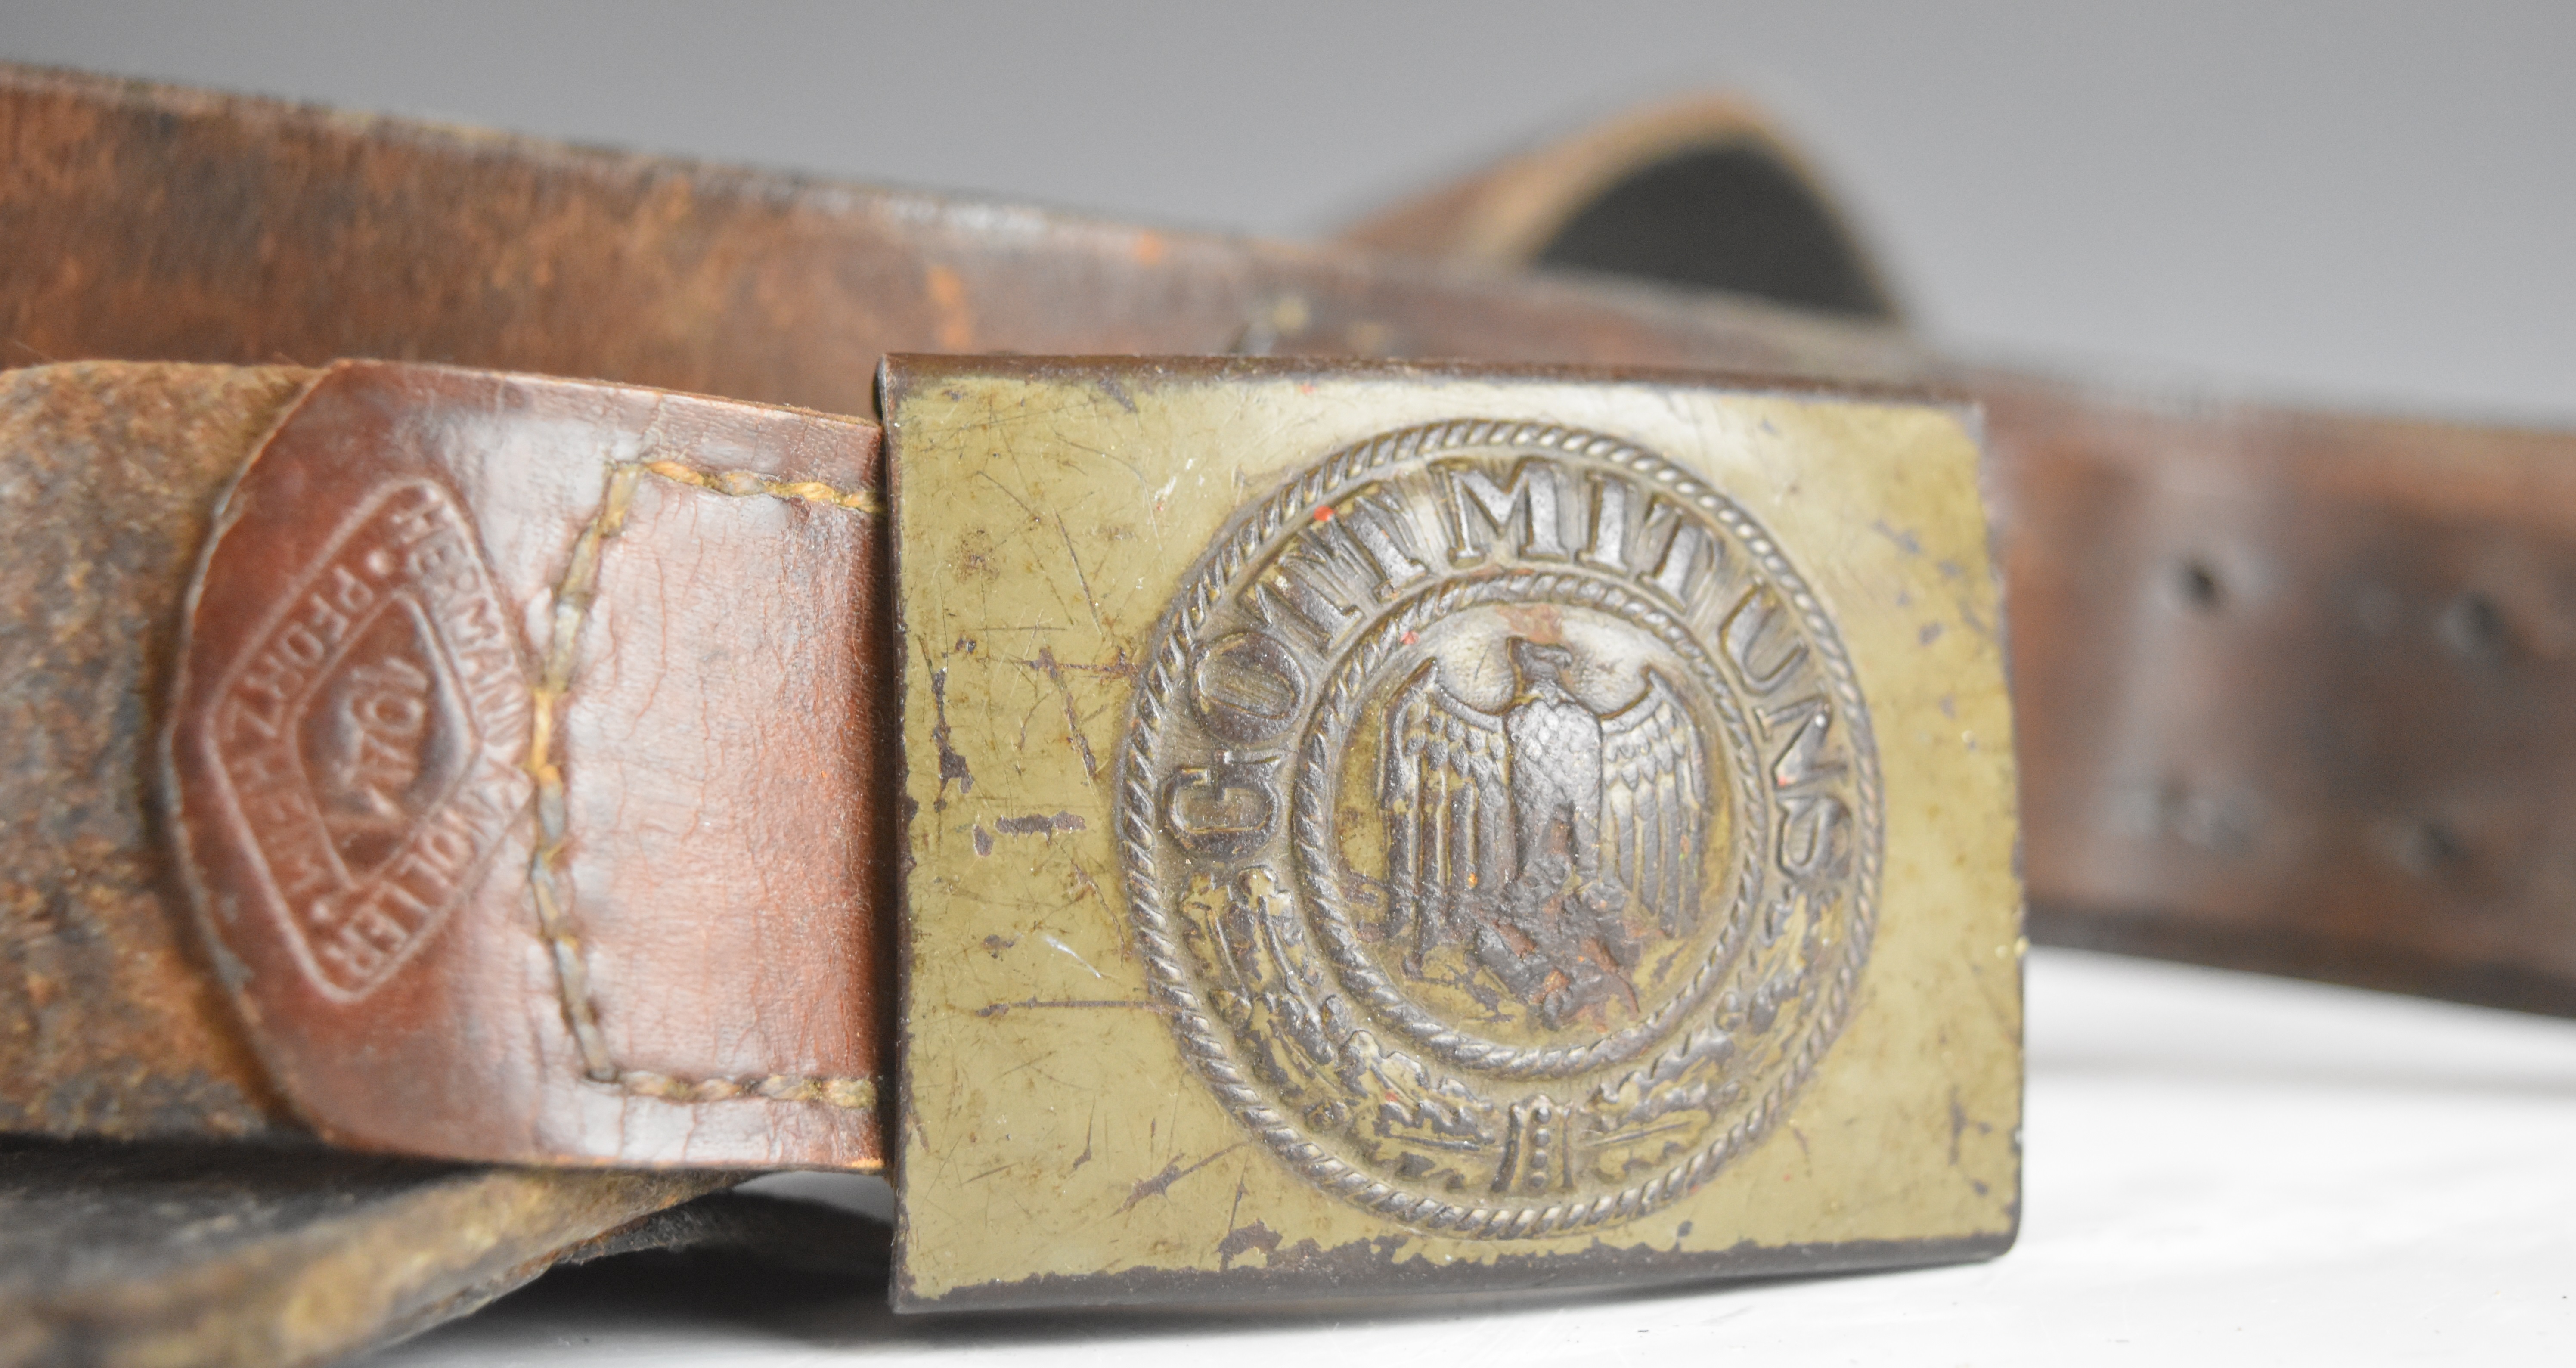 German WW2 Nazi Third Reich belt buckle and belt stamped Herman Knoller, Pforzhfim 1944 - Image 4 of 4